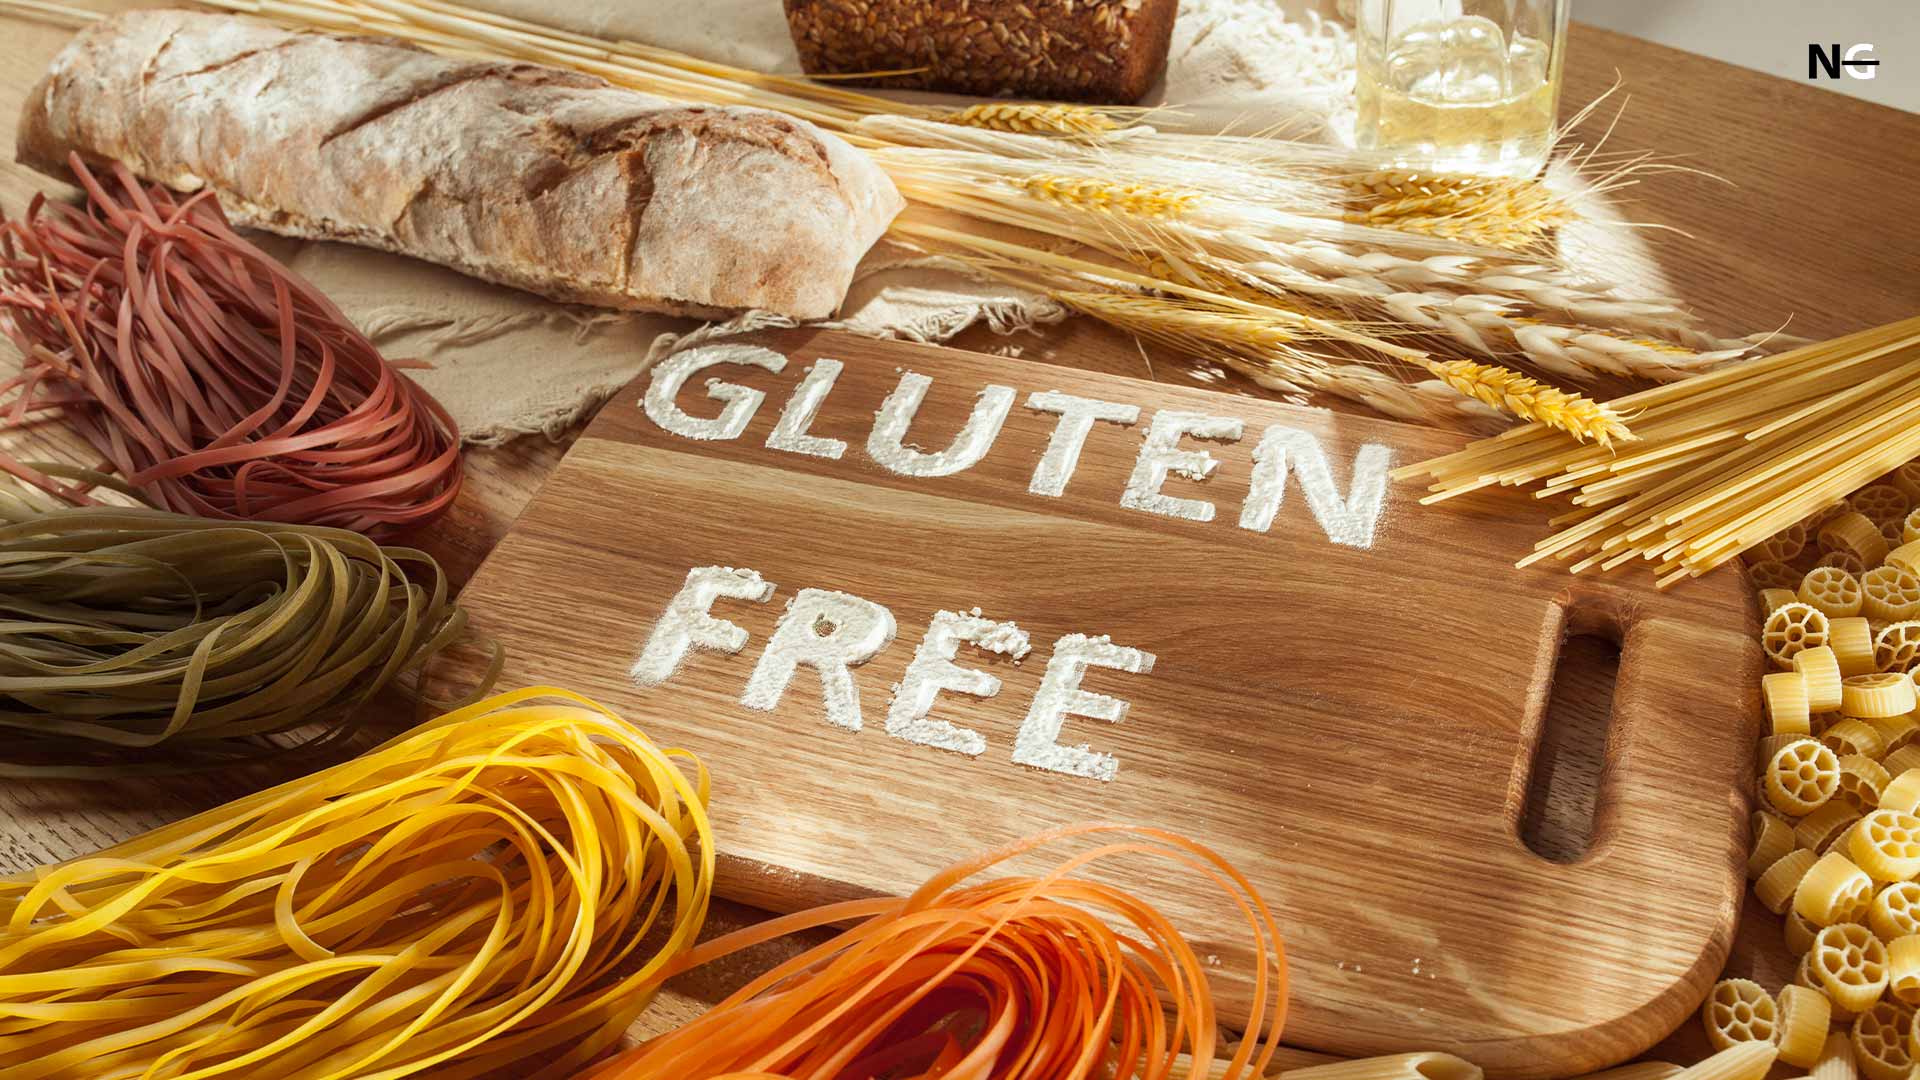 Why Should Celiacs Avoid Gluten